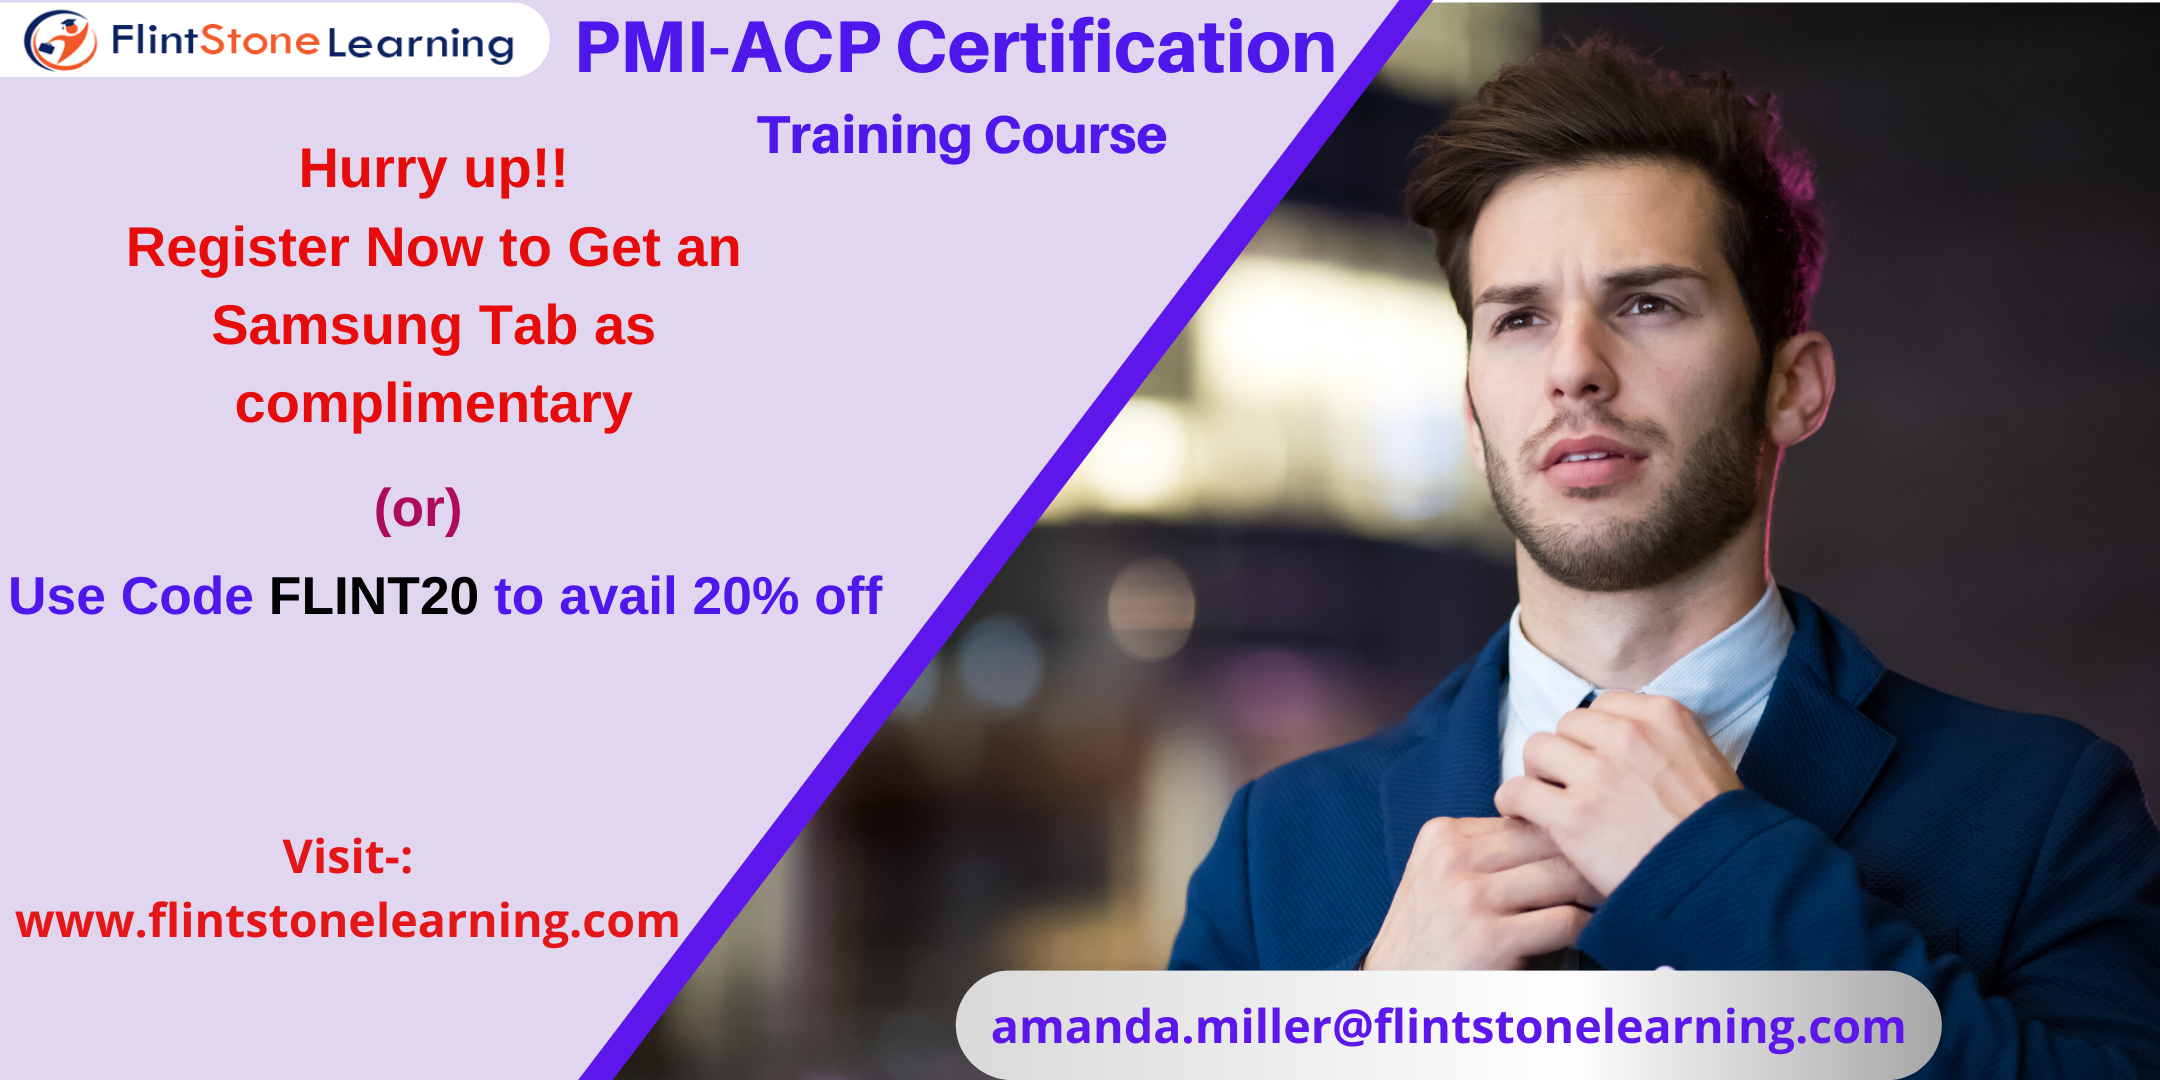 PMI-ACP Certification Training Course in Emeryville, CA